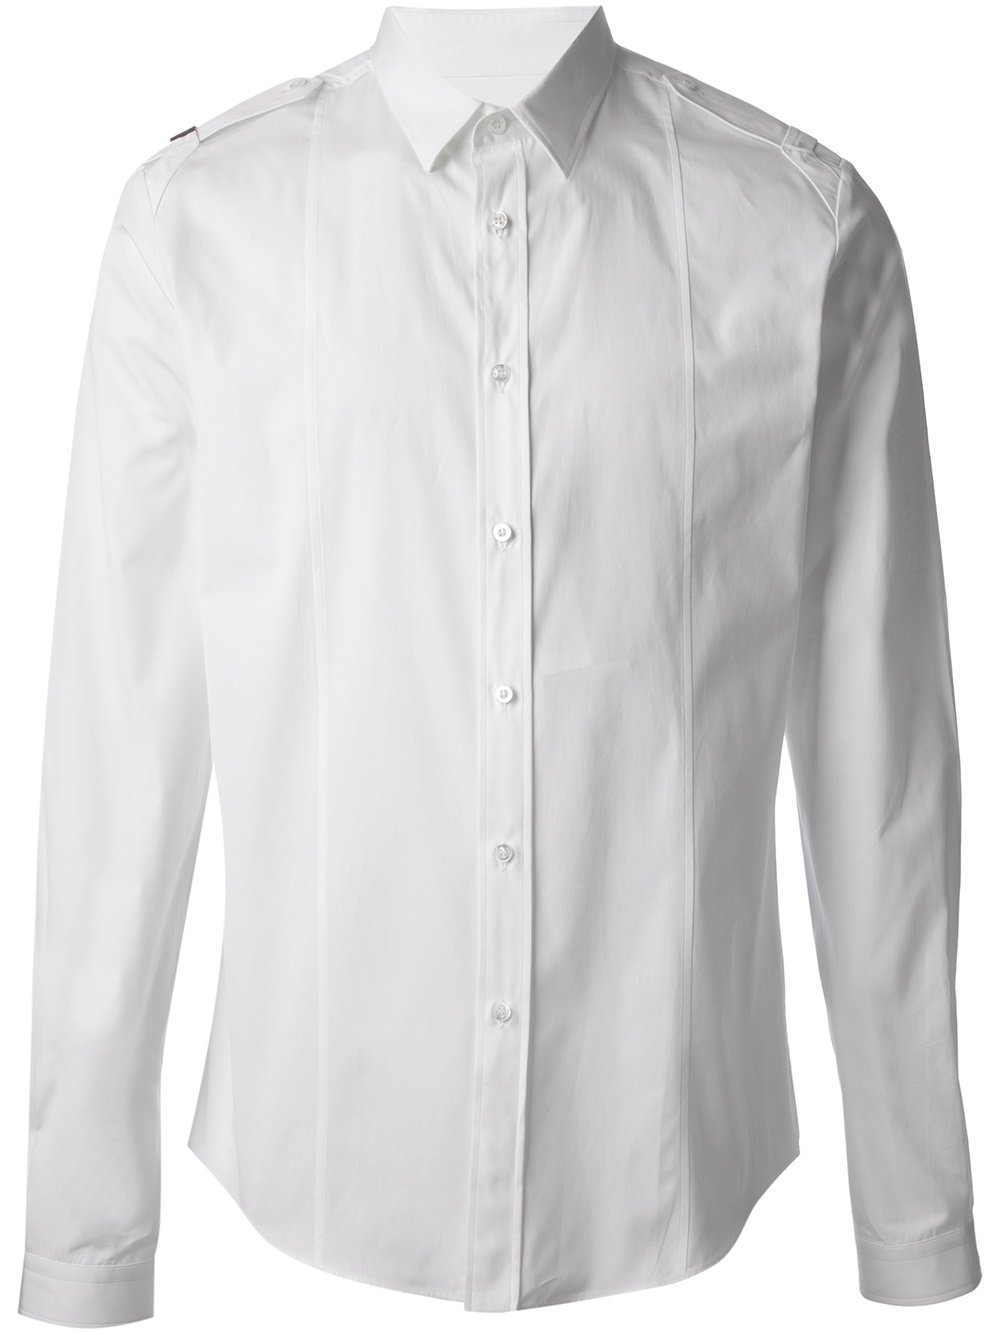 white gucci button up shirt